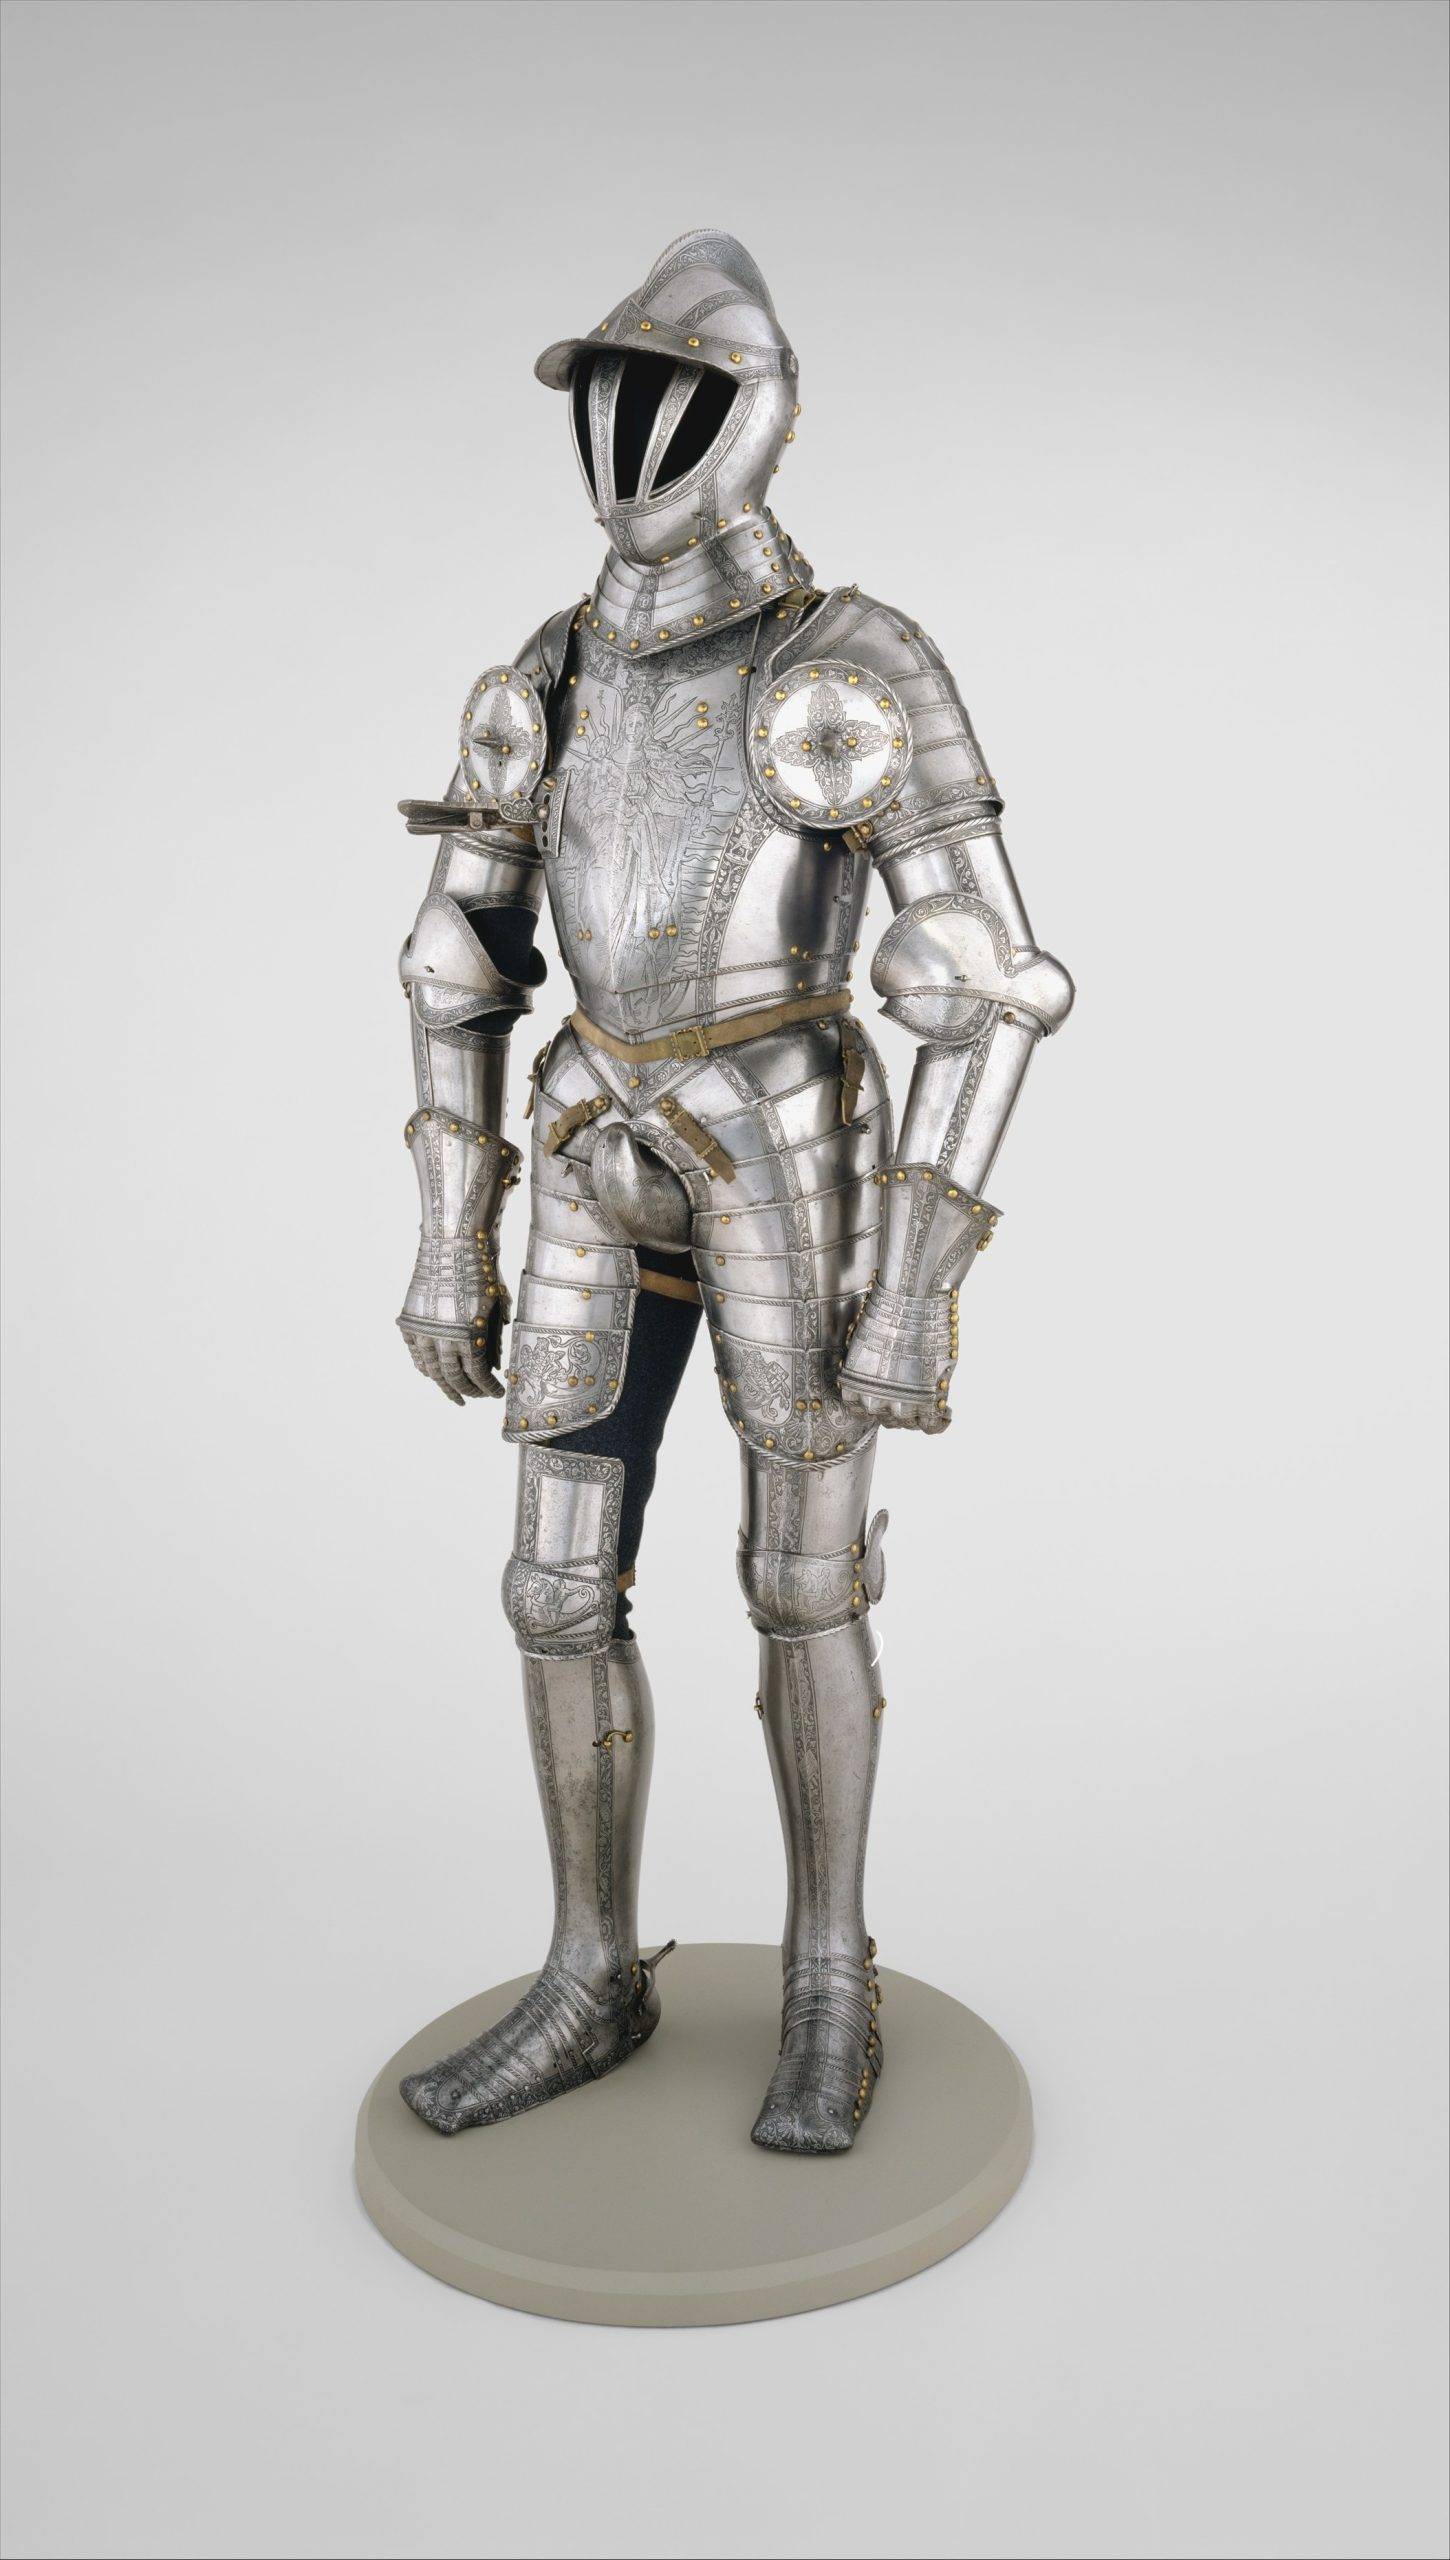 armor of ferdinand i, holy roman emperor